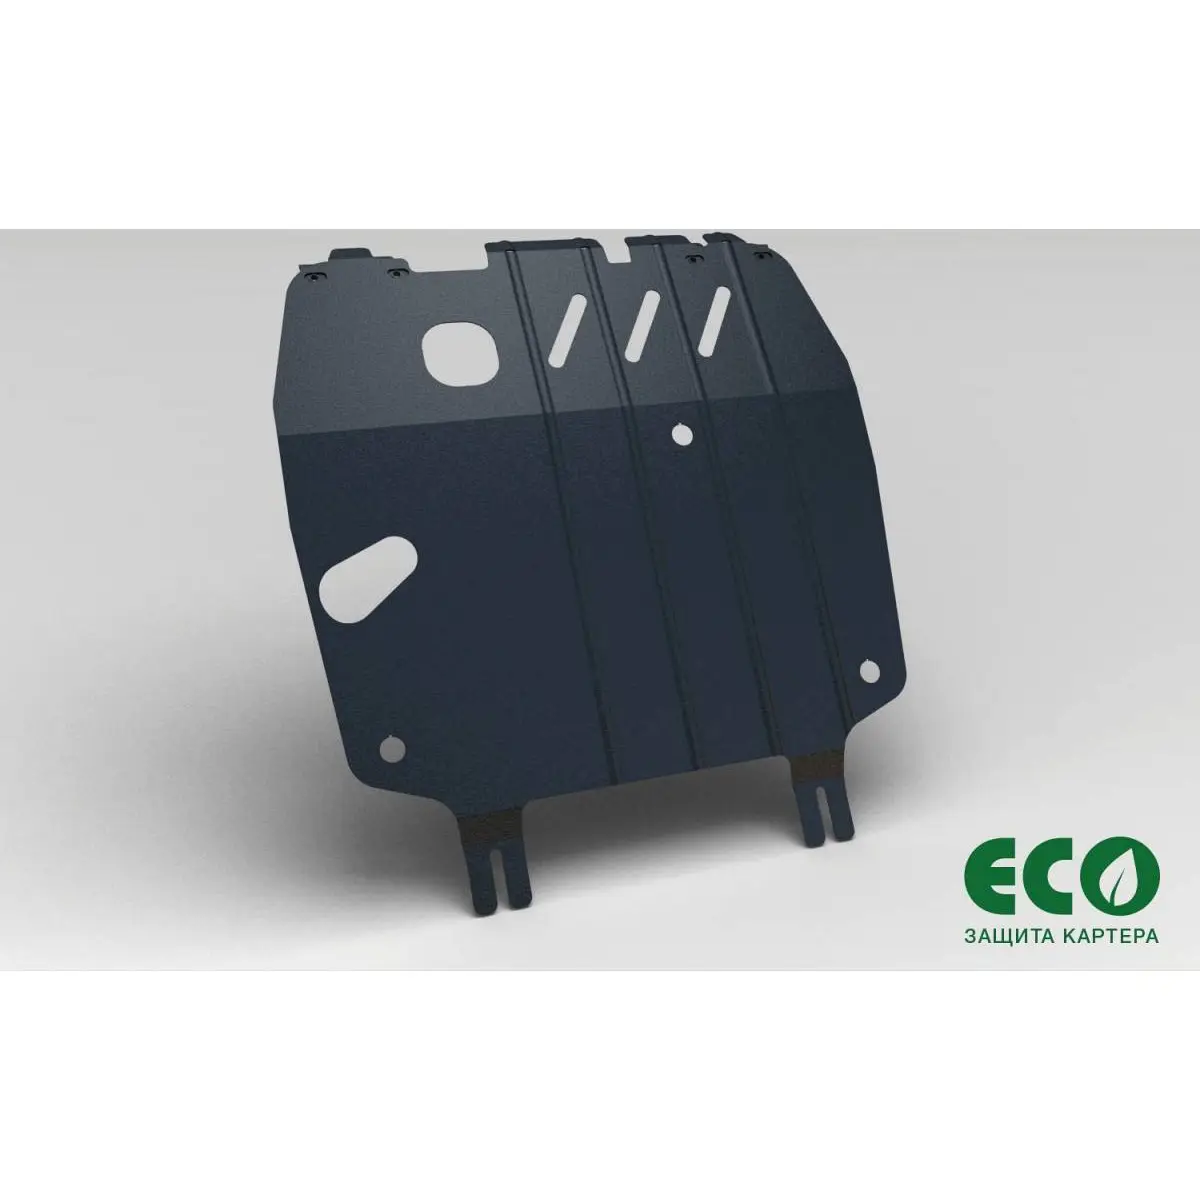 Комплект защиты картера и крепеж Eco GQRYU RS4J D eco3531020 1437099112 изображение 0